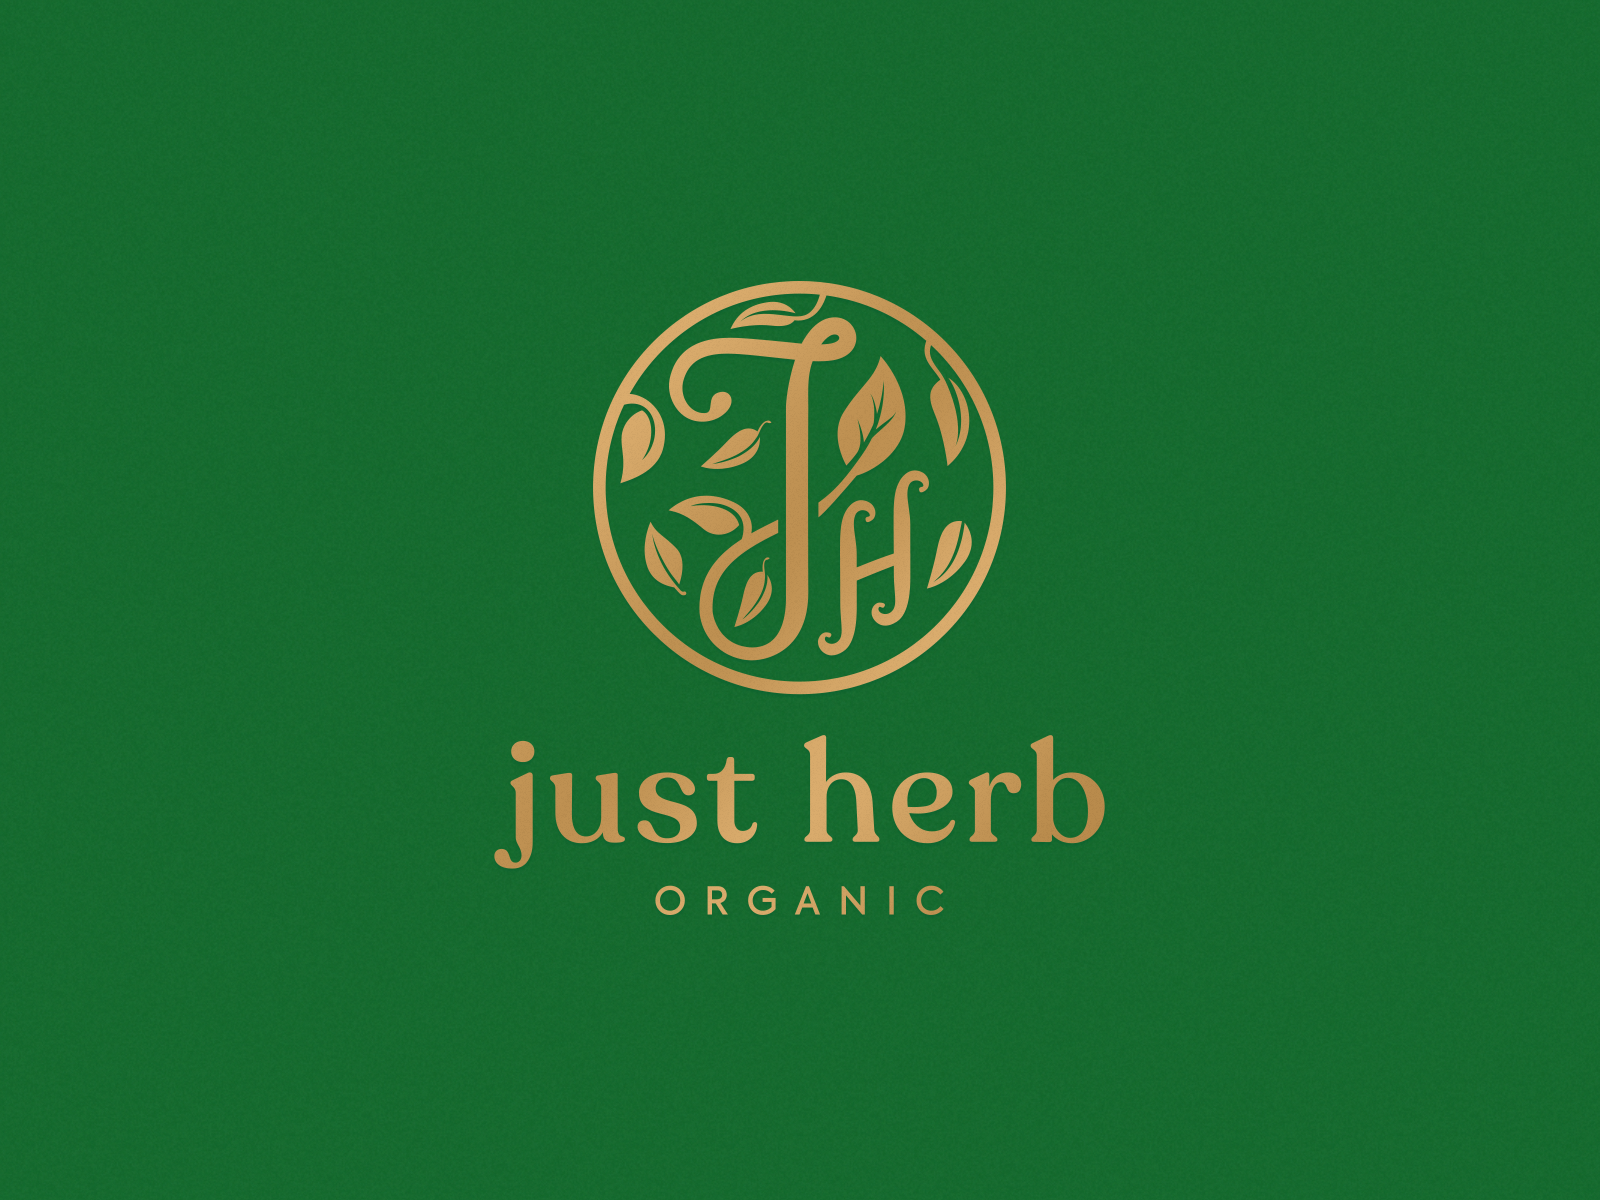 Just Herb - organic vinegar by Maciek Kaźmierczak on Dribbble